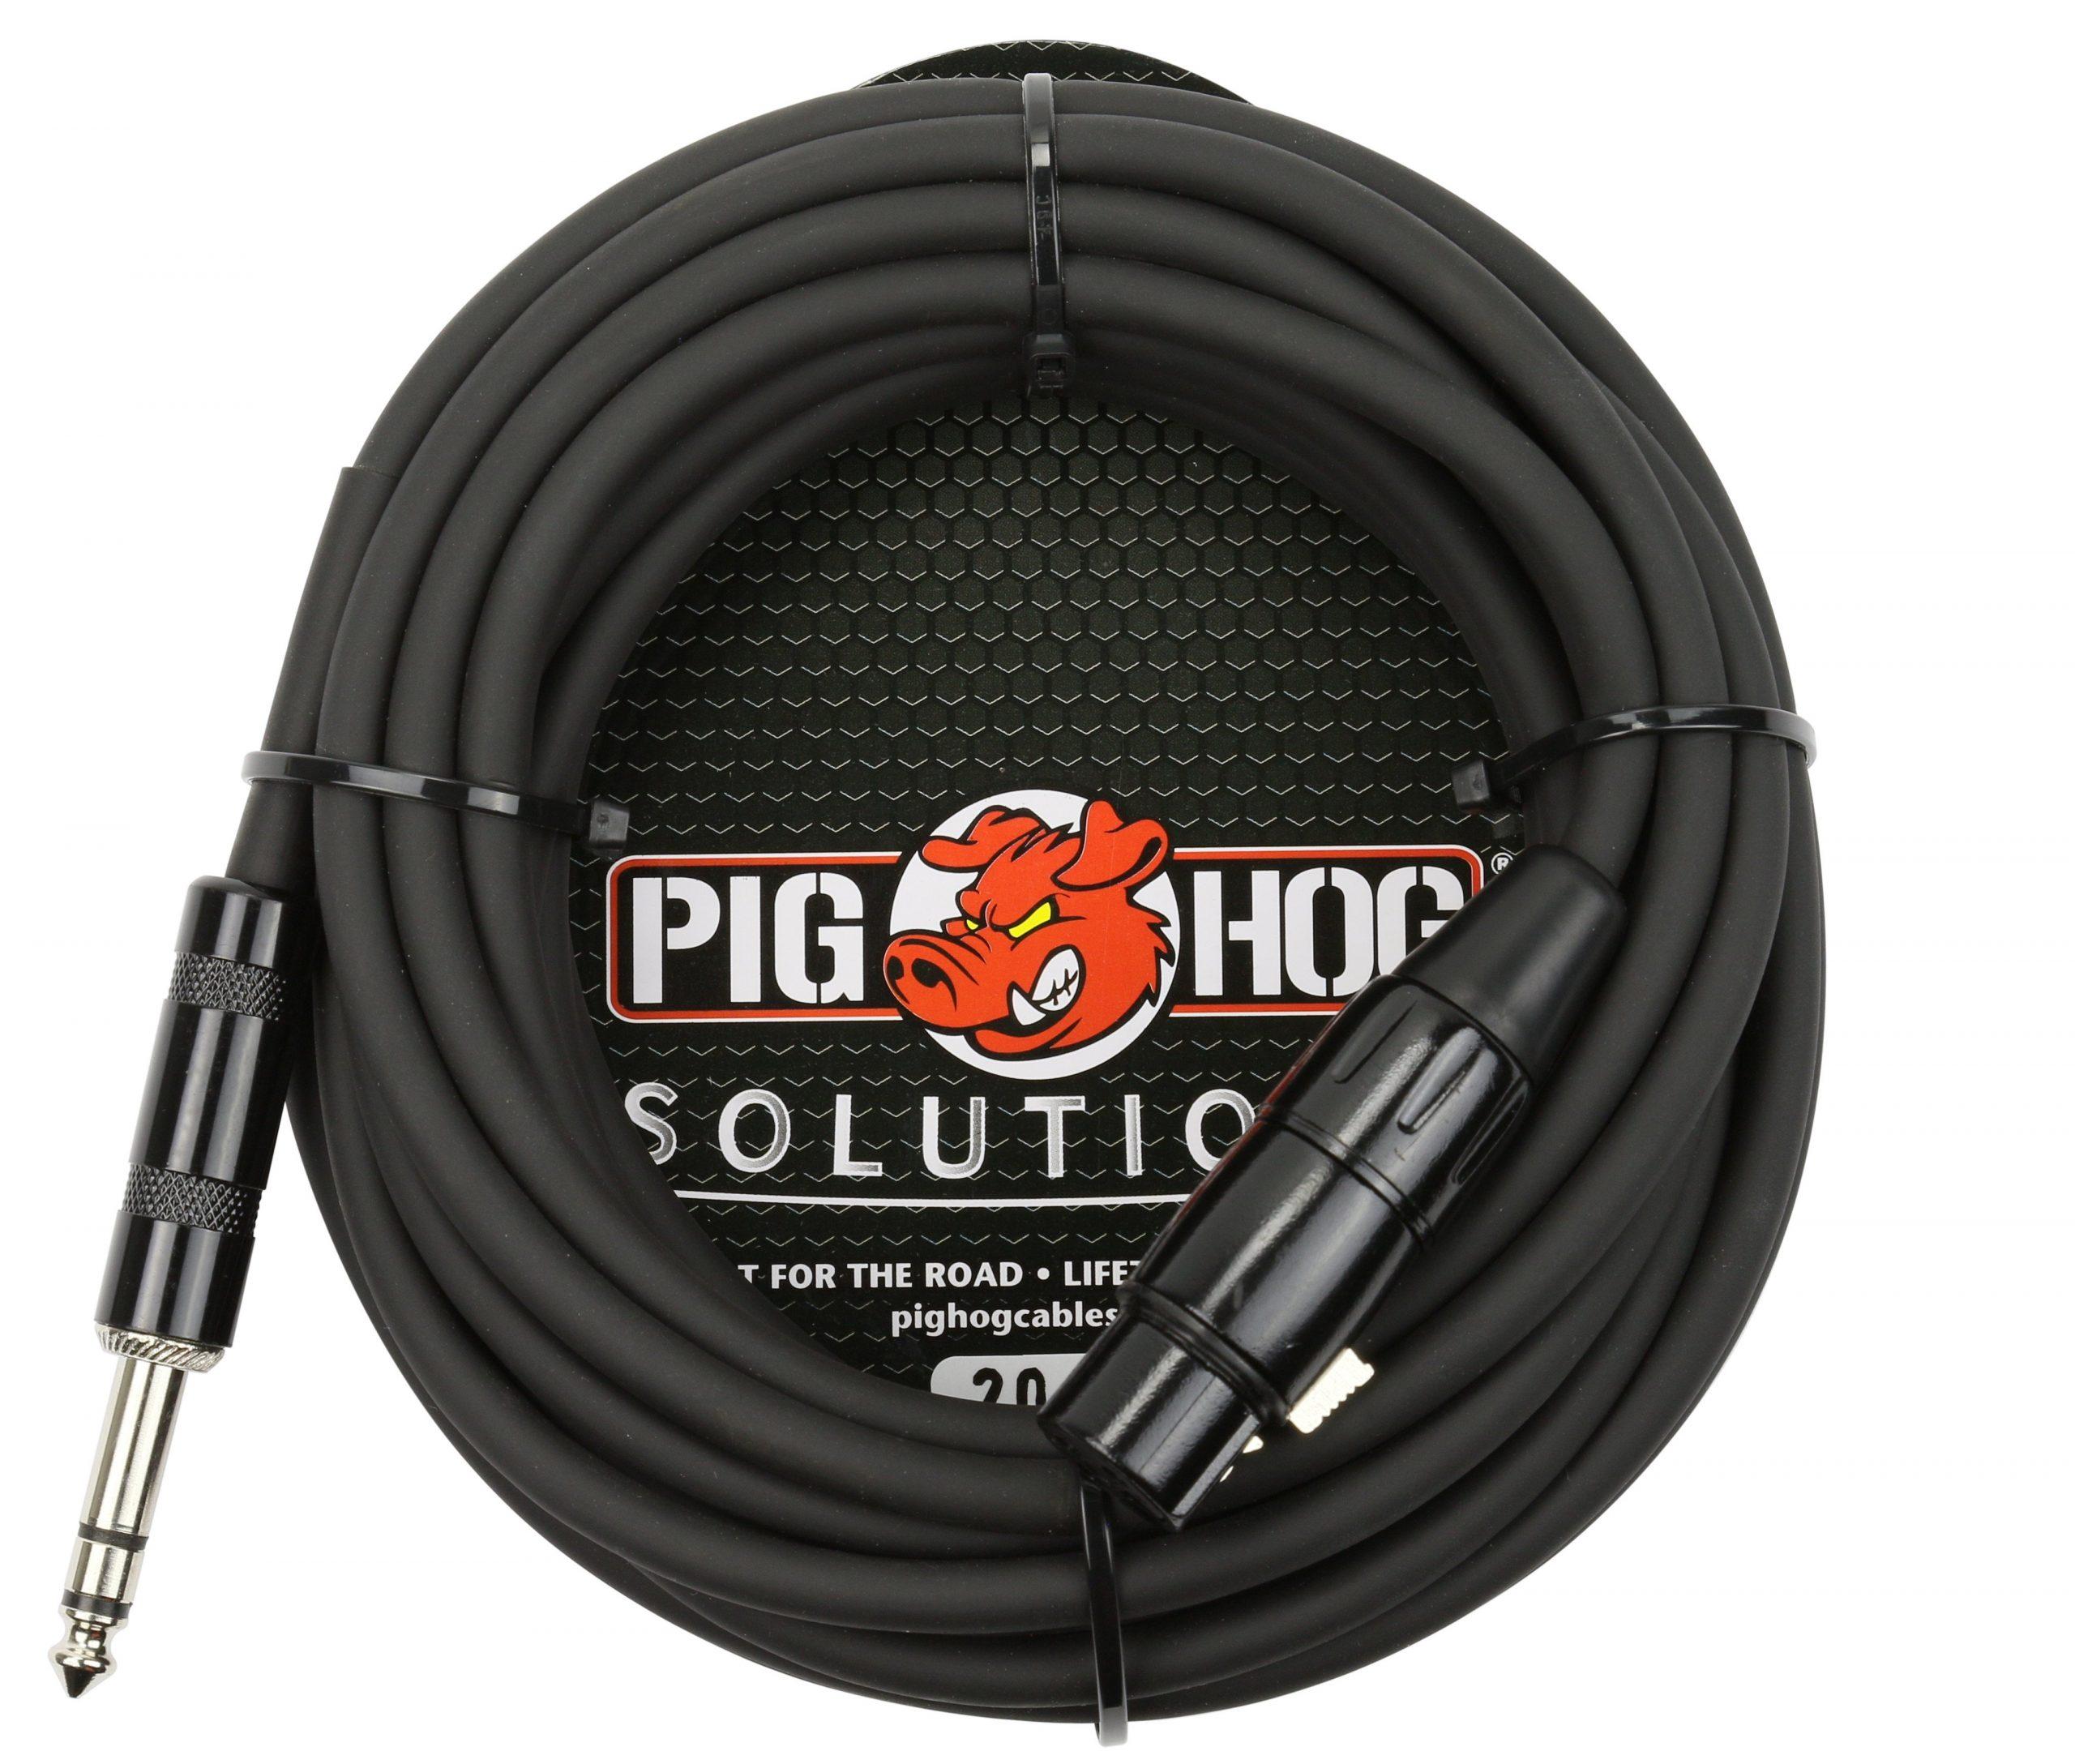 Pig Hog Solutions - 20ft TRS(M)-XLR(F) Balanced Cable